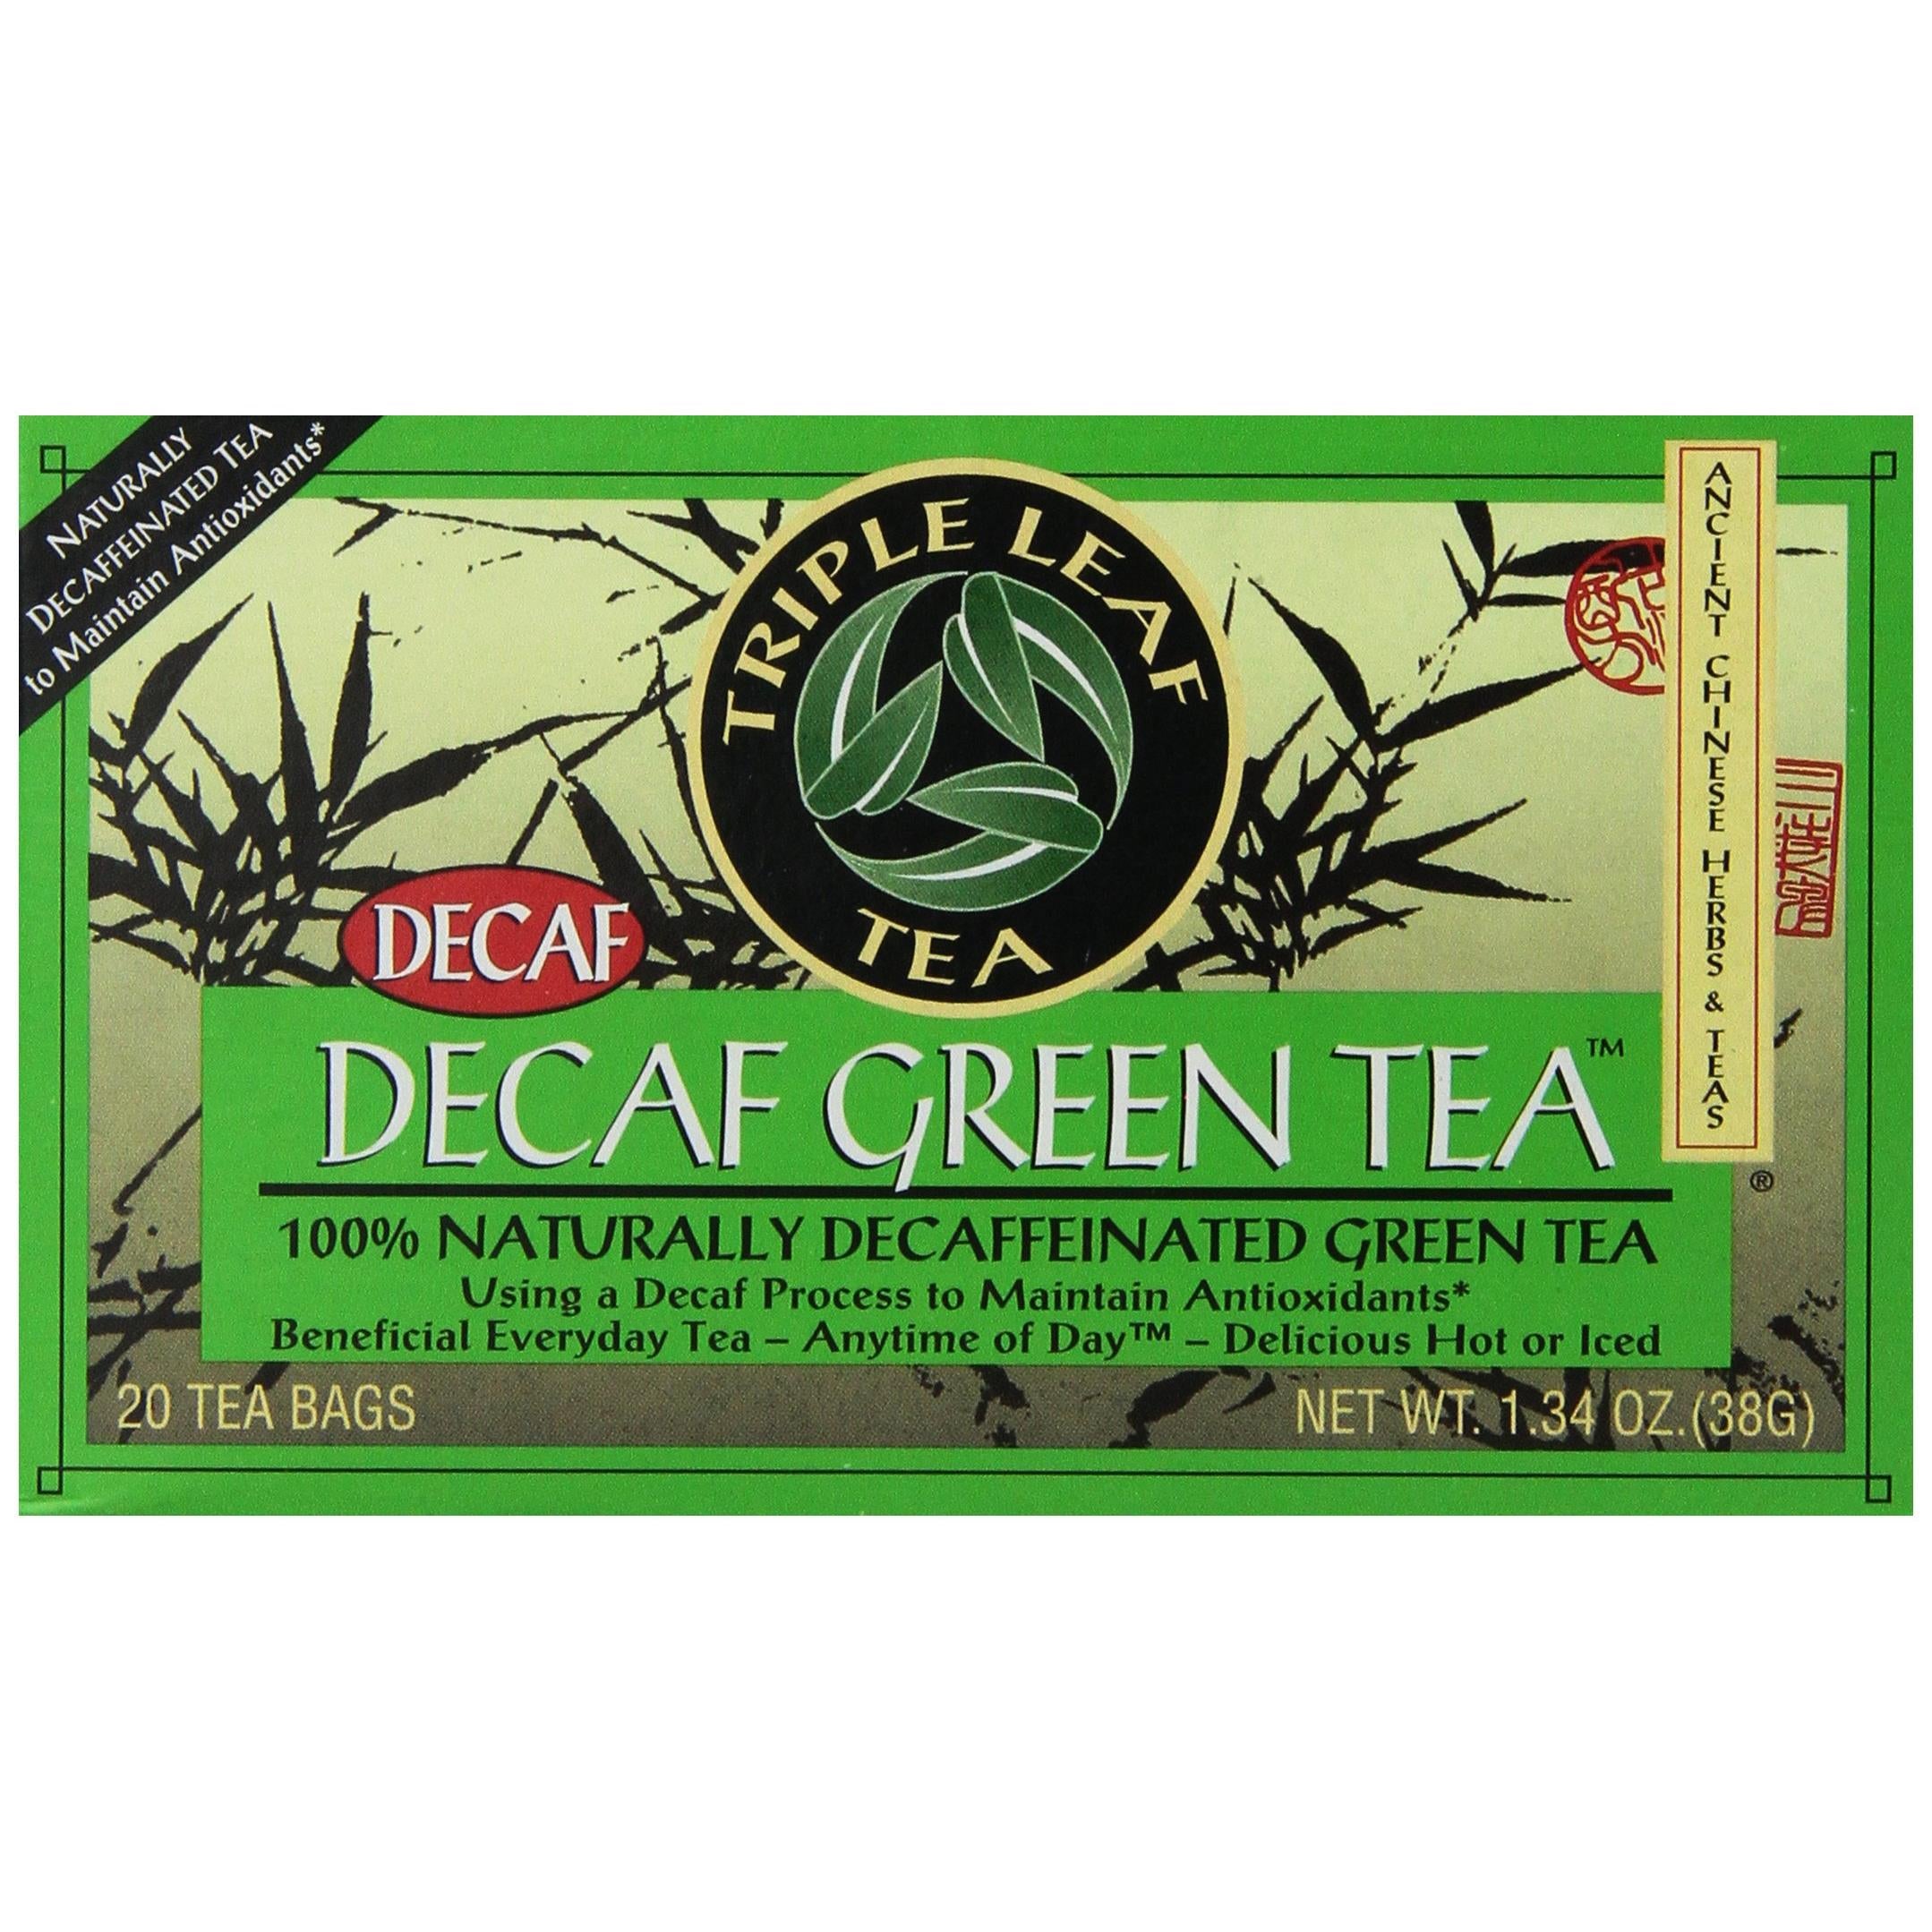 Triple Leaf Tea, Decaf Green Tea, 20 Tea Bags (Pack of 6)